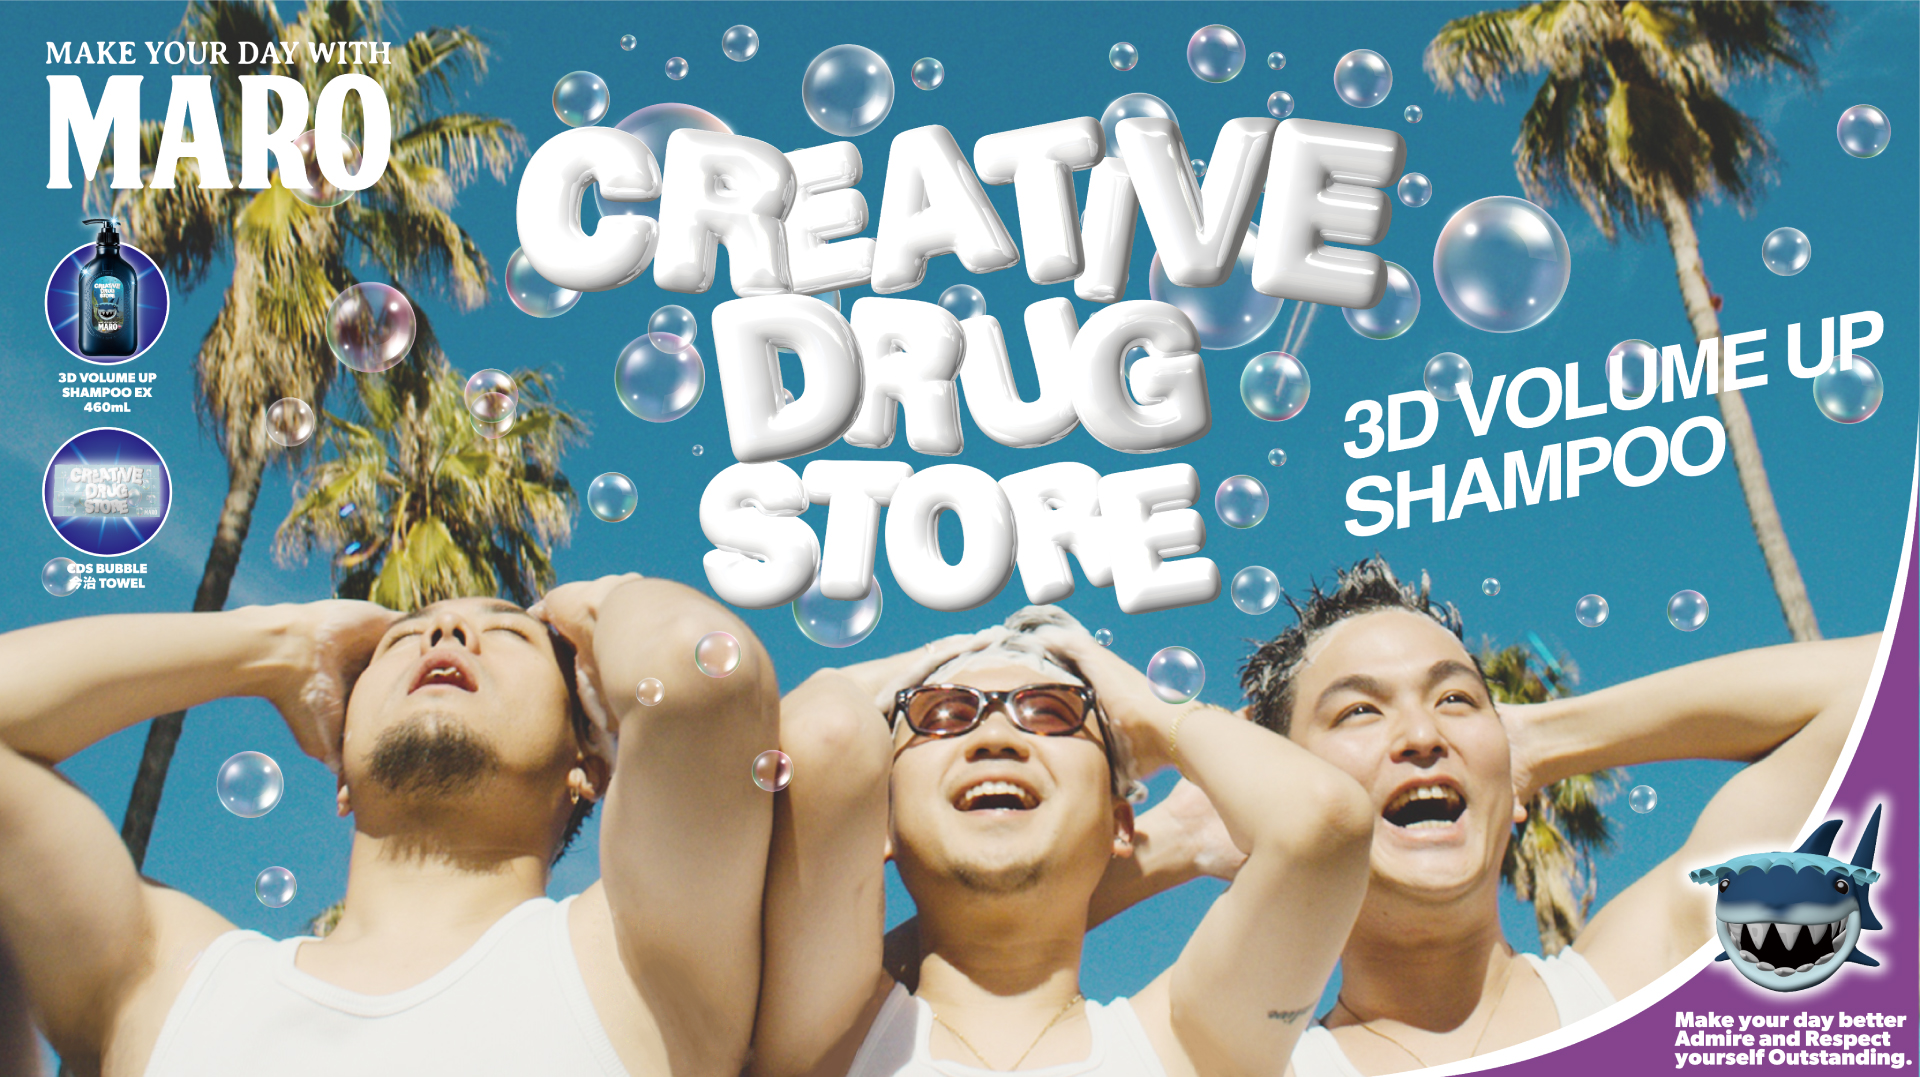 CREATIVE DRUG STORE